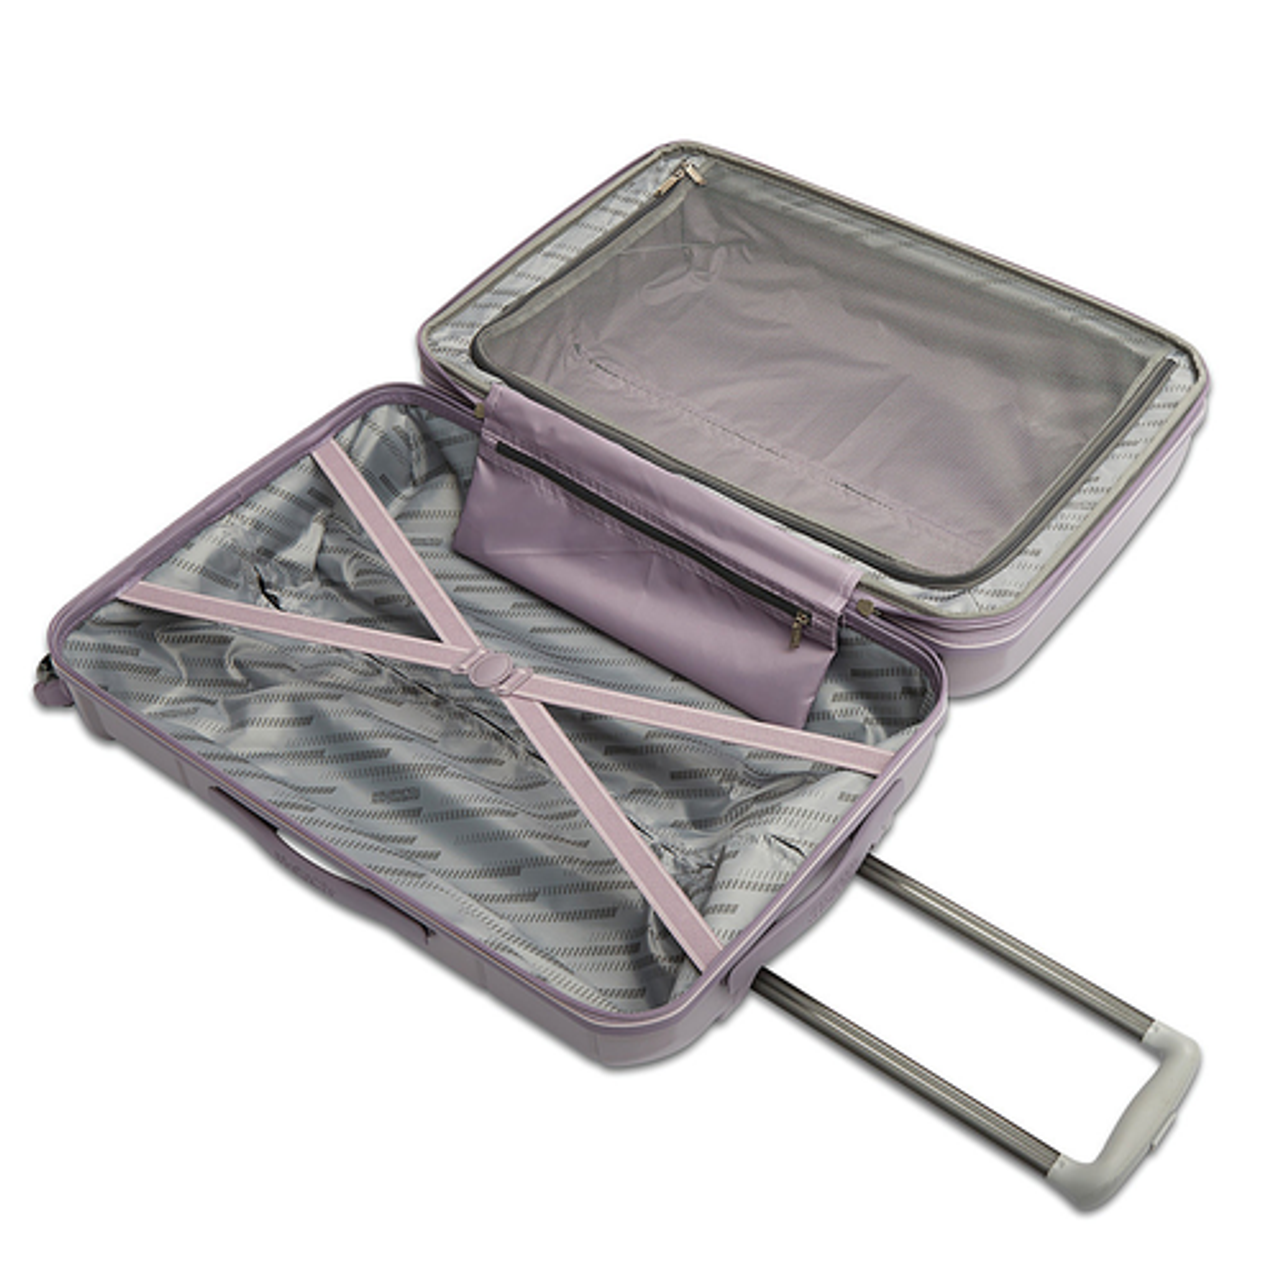 American Tourister - Stratum 2.0 20" Spinner Suitcase - Purple Haze